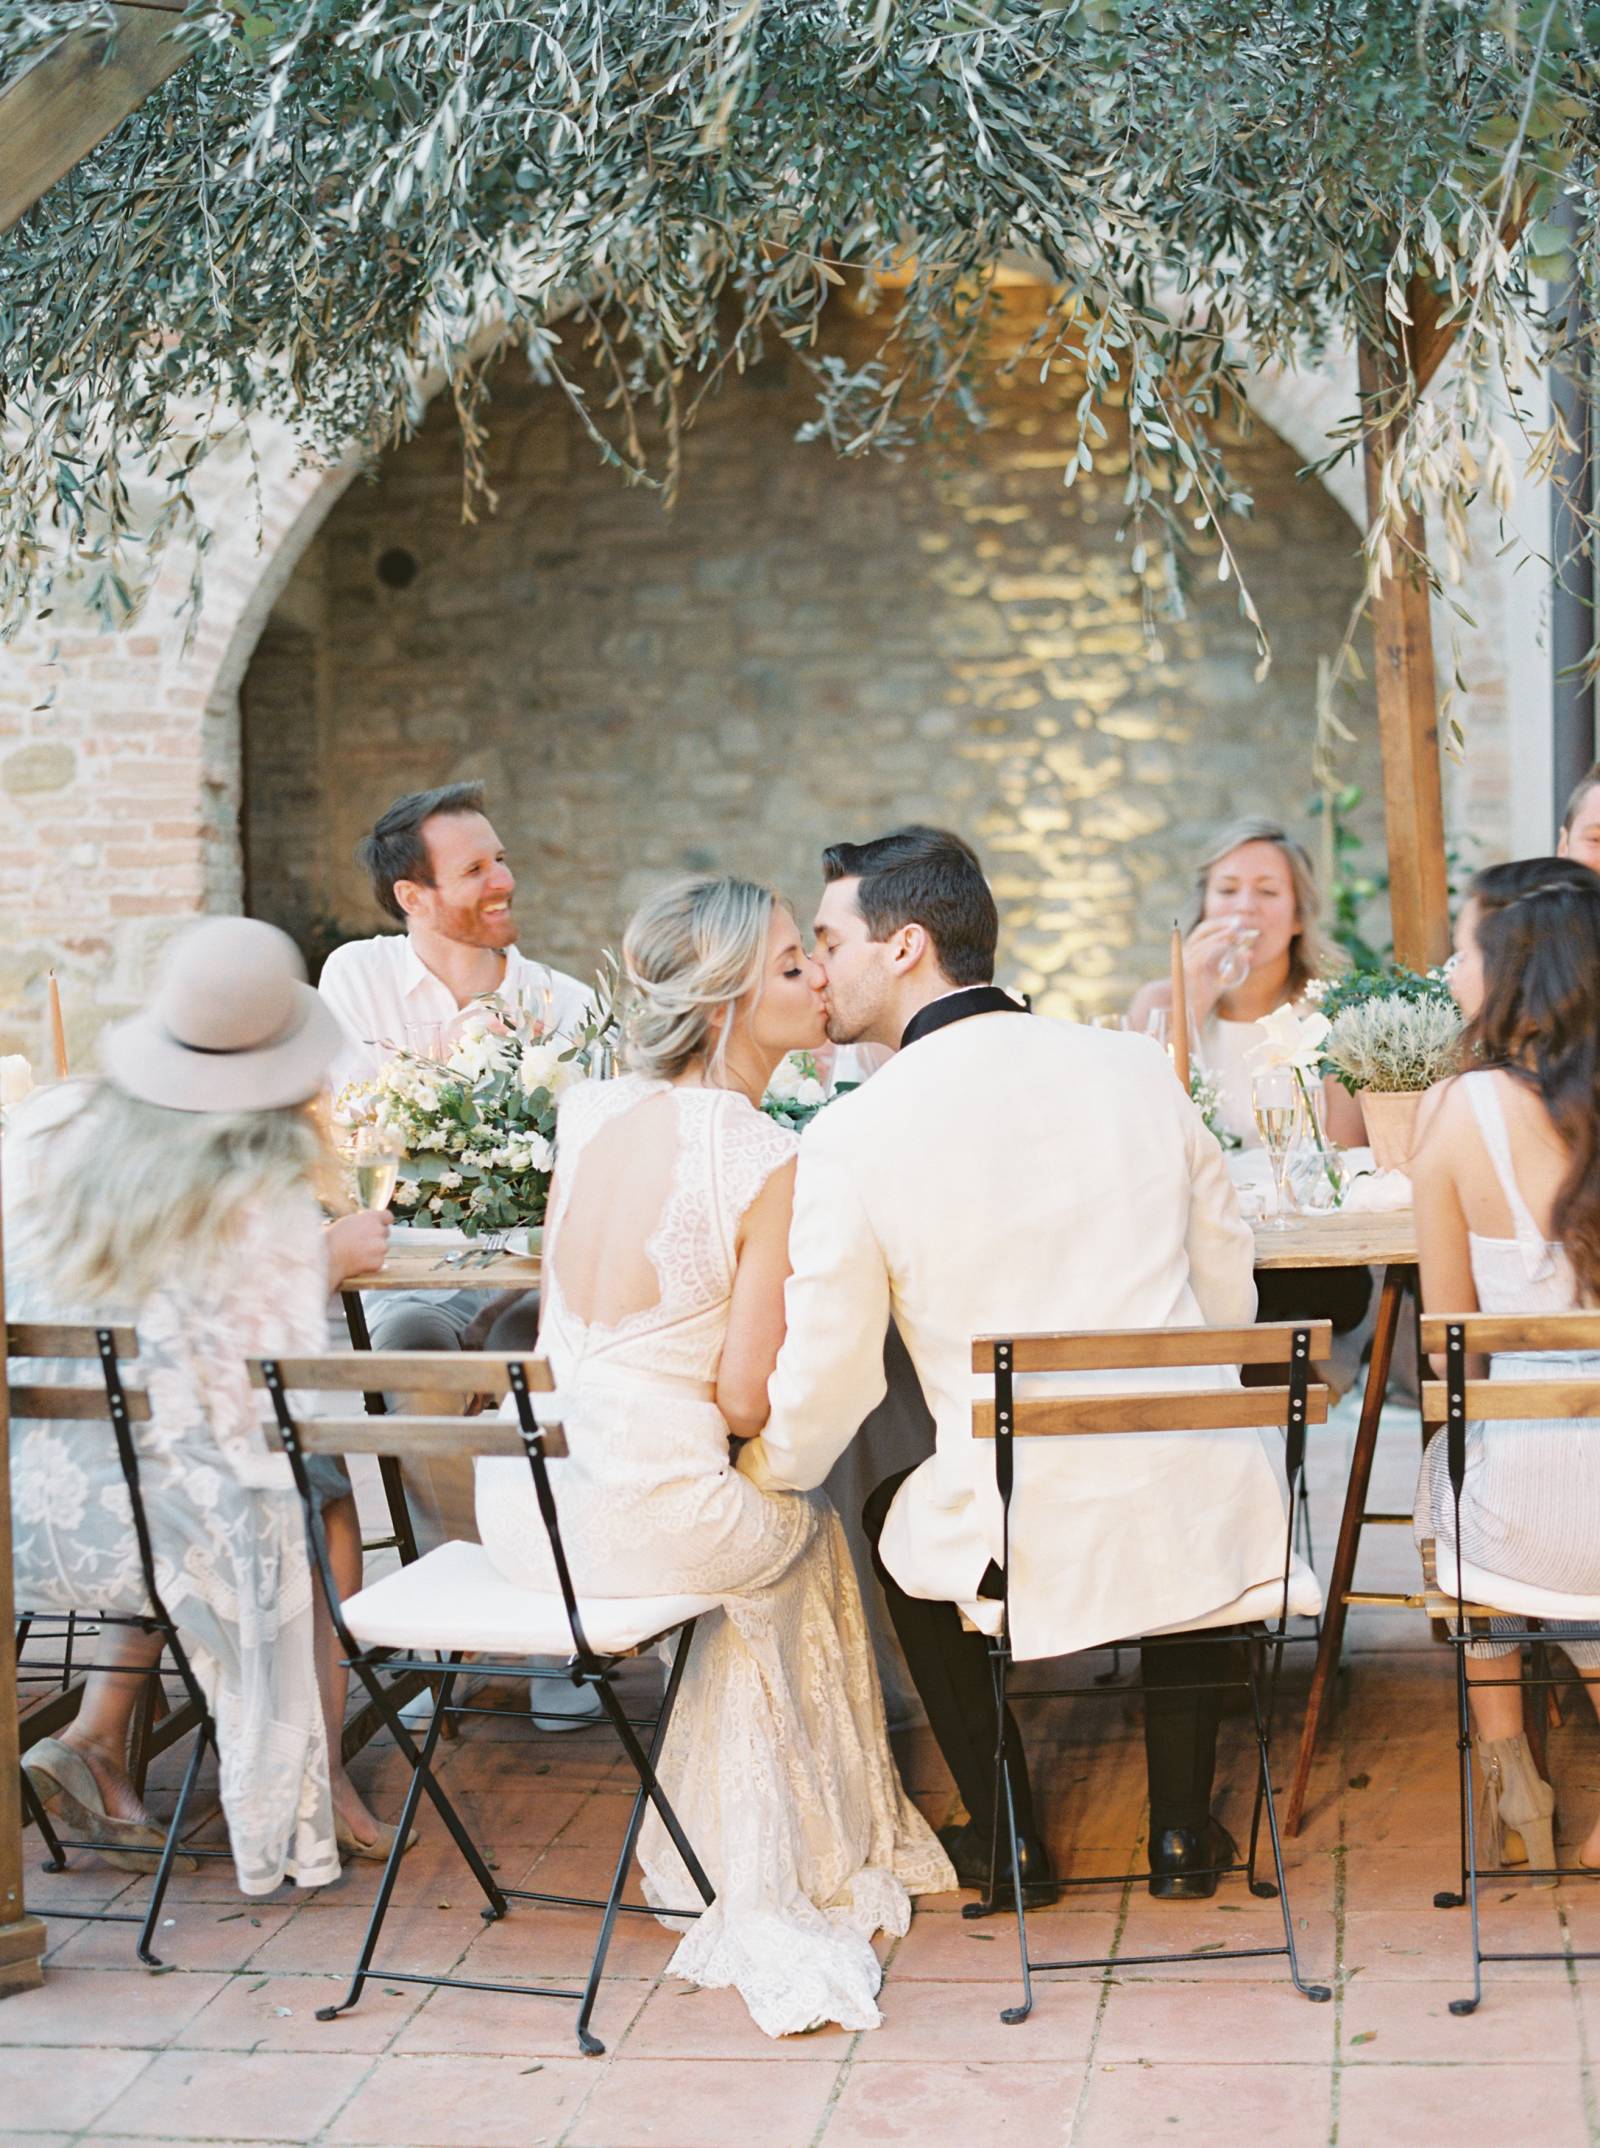 Romantic Destination Wedding Inspiration in Tuscany | Tuscany Wedding ...